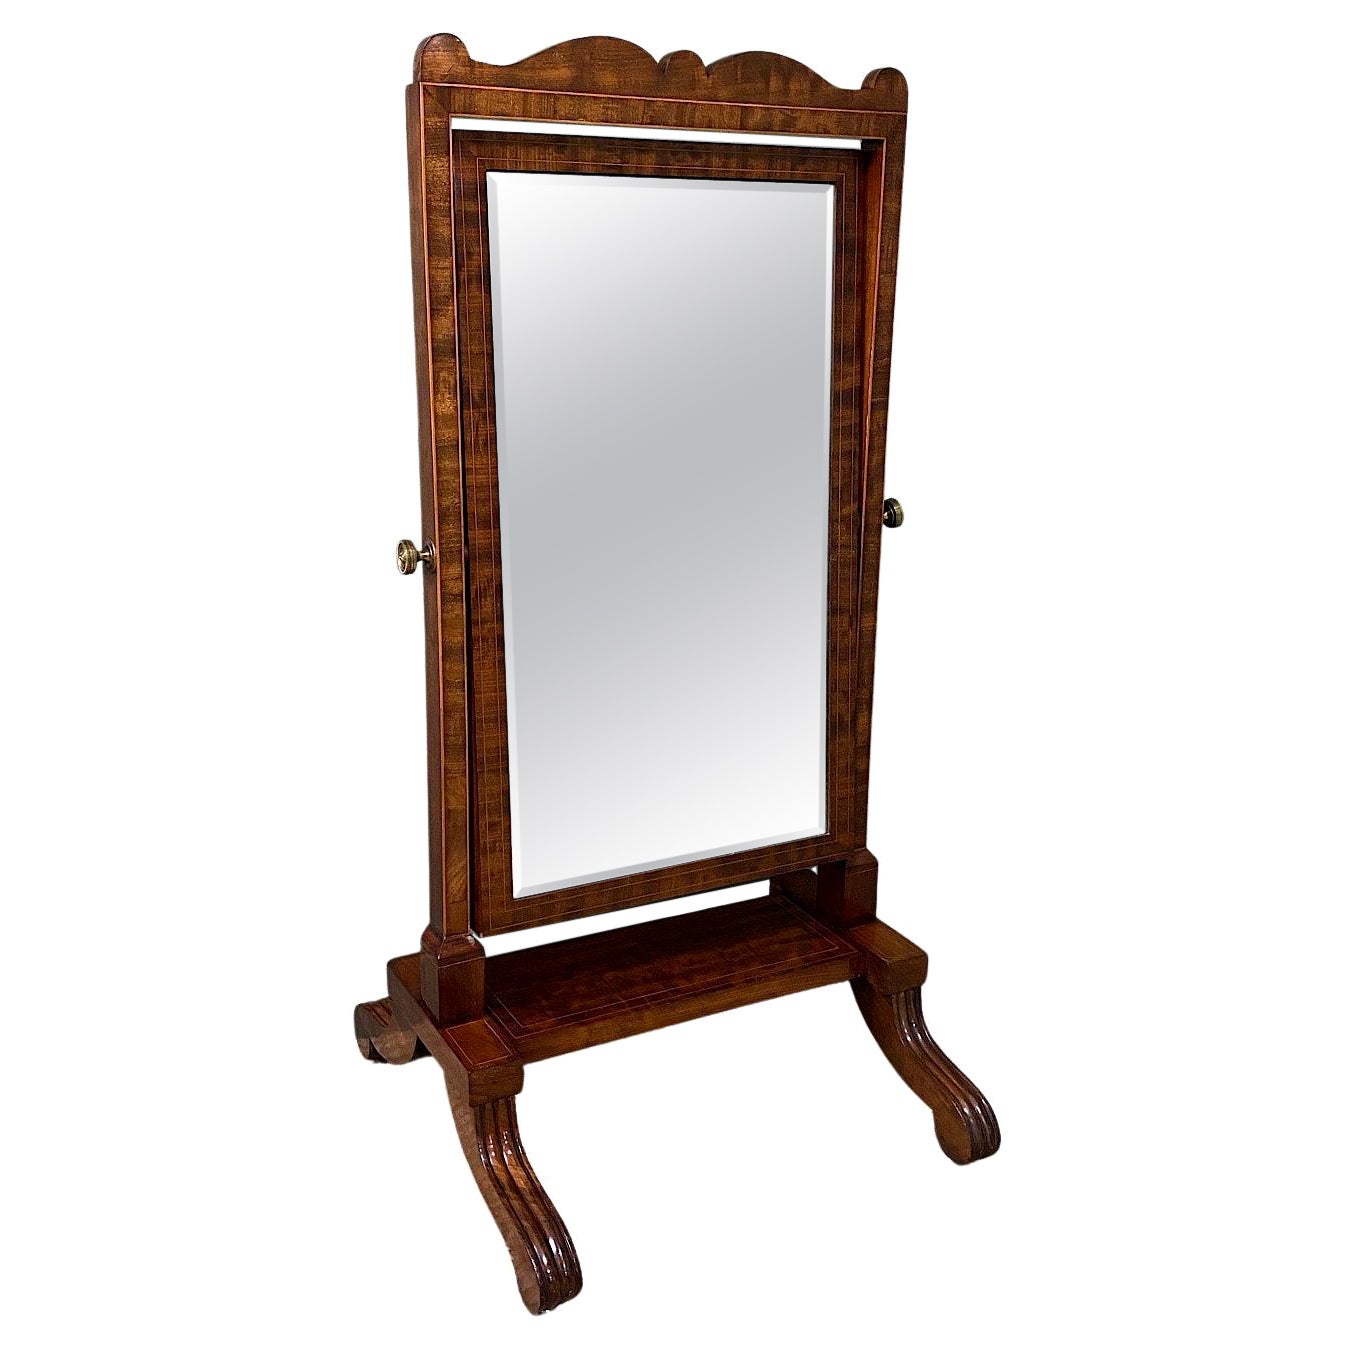 Elegant 19th century Small Victorian Inlaid Antique Cheval Mirror For Sale